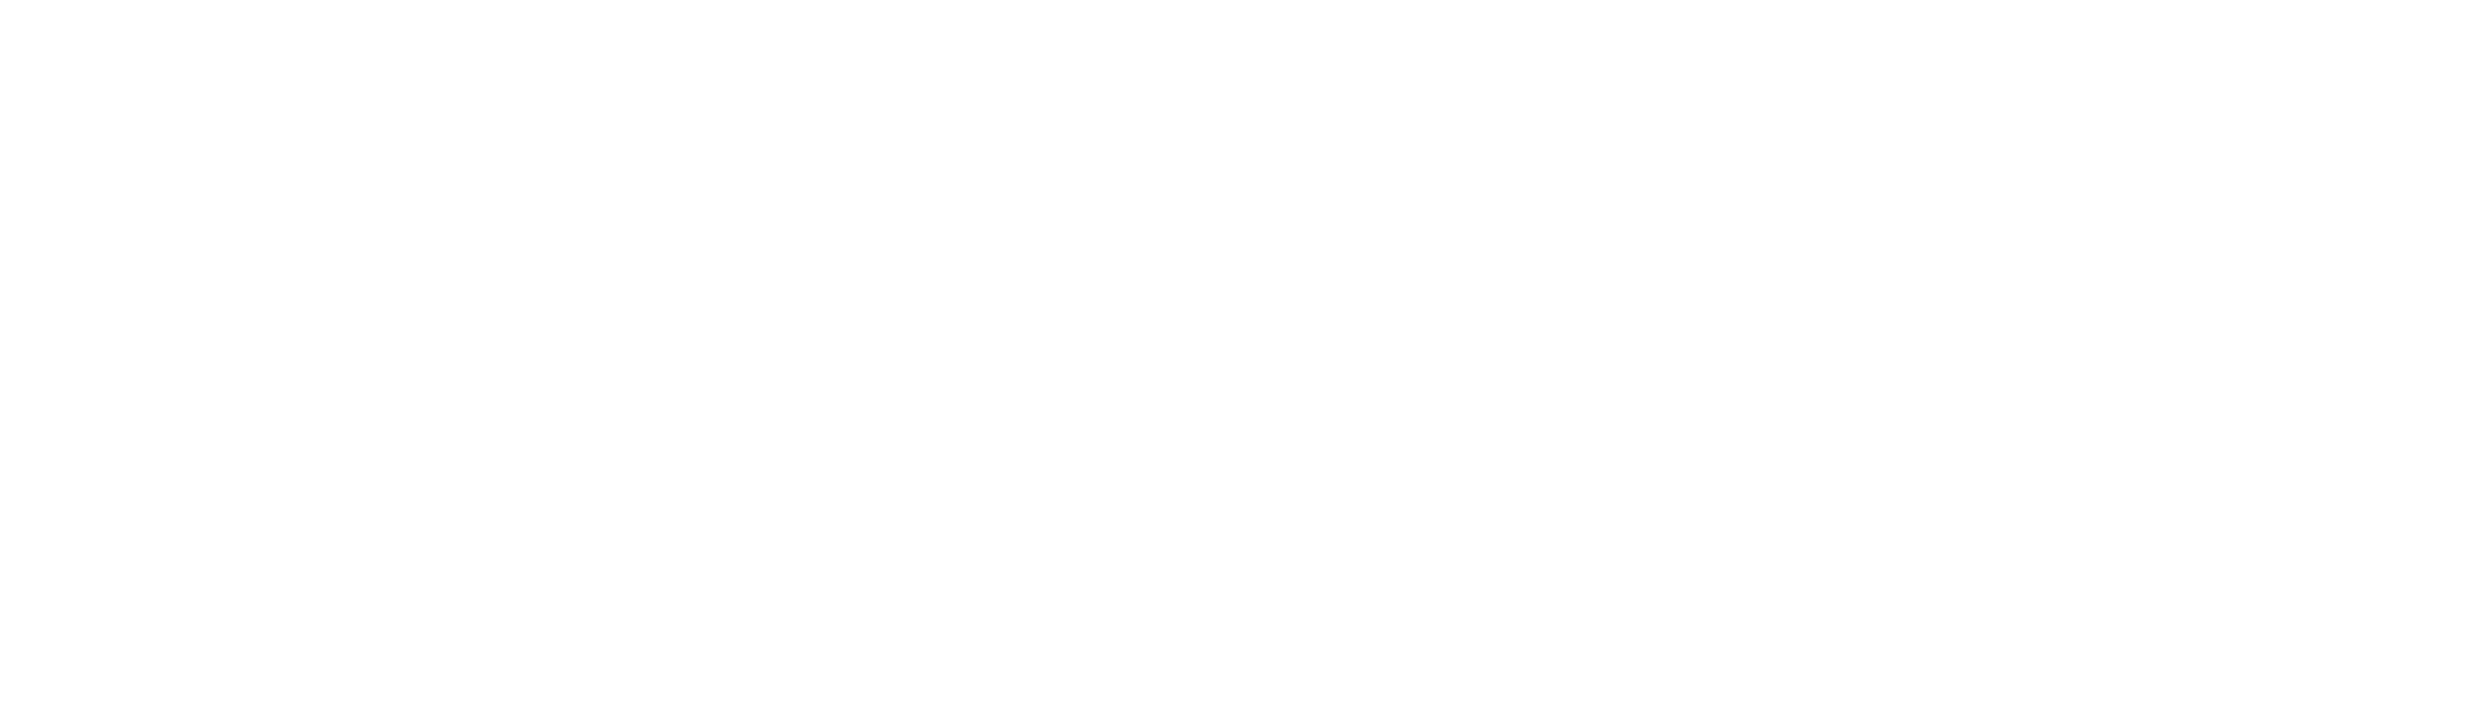 becaescuchame